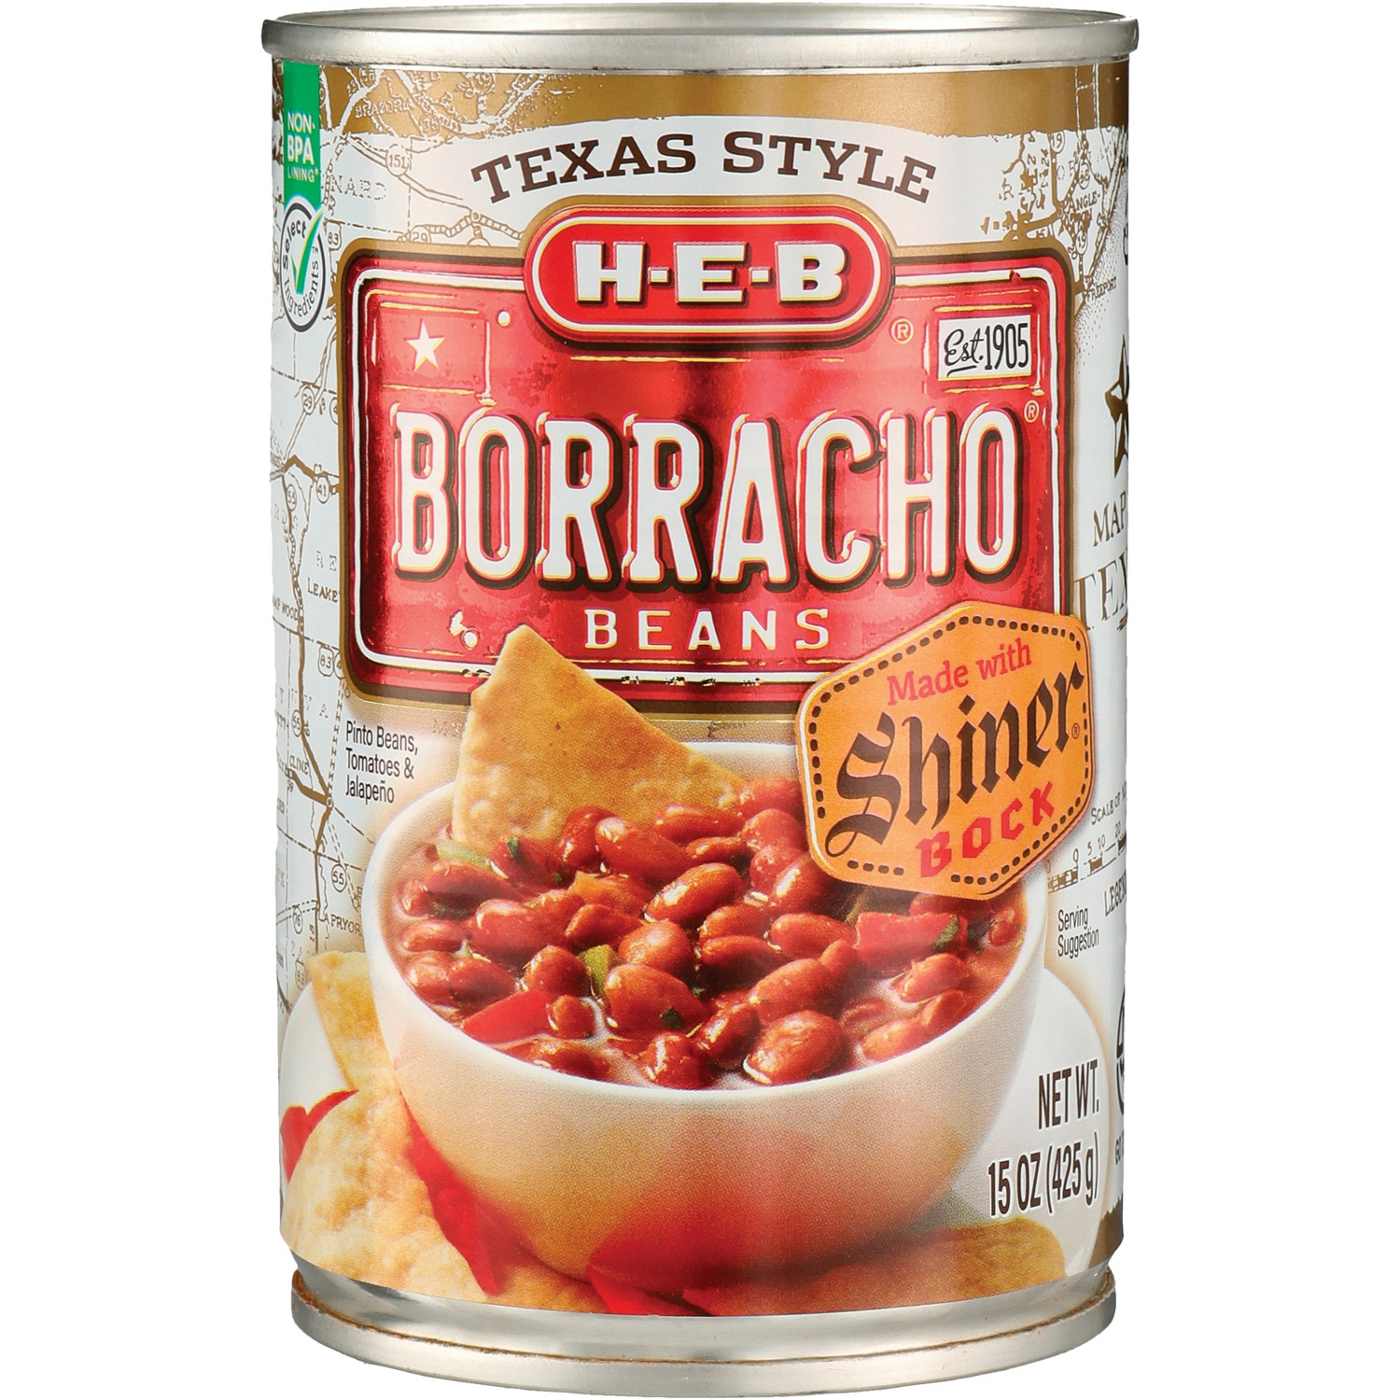 H-E-B Borracho Beans with Shiner Bock; image 2 of 2